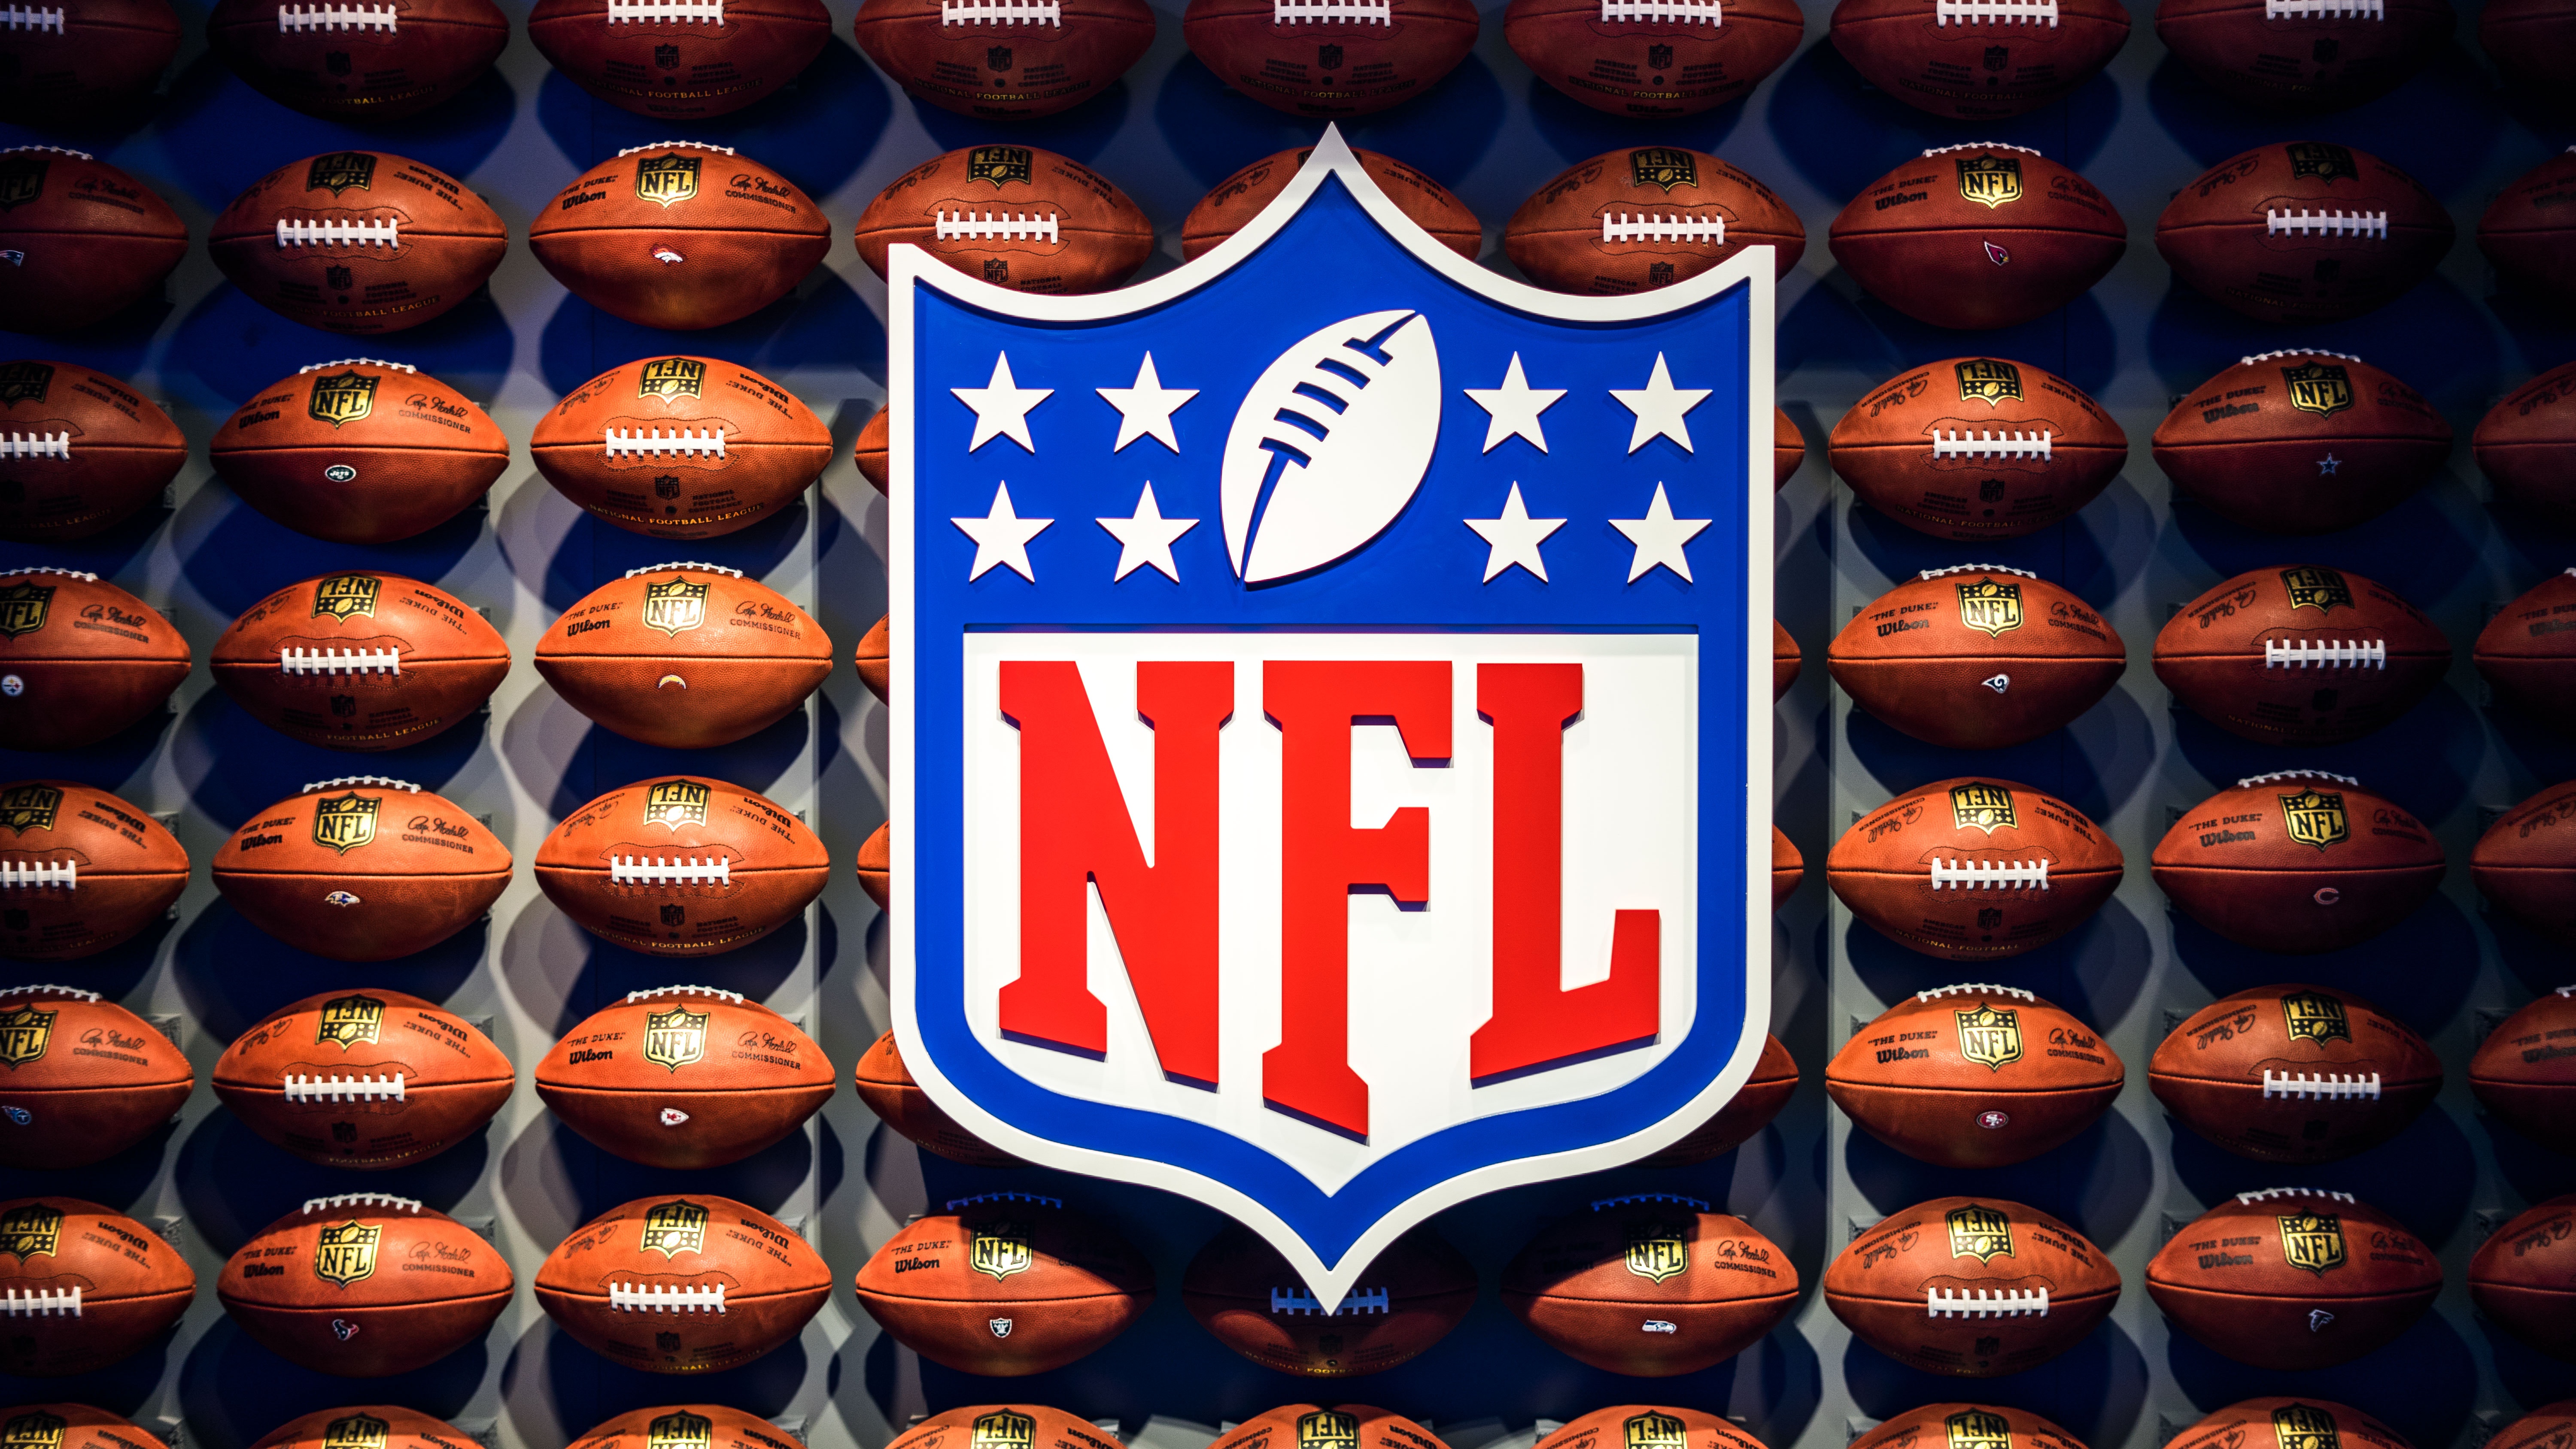 NFL Sunday Ticket 2023: Should You Get It?